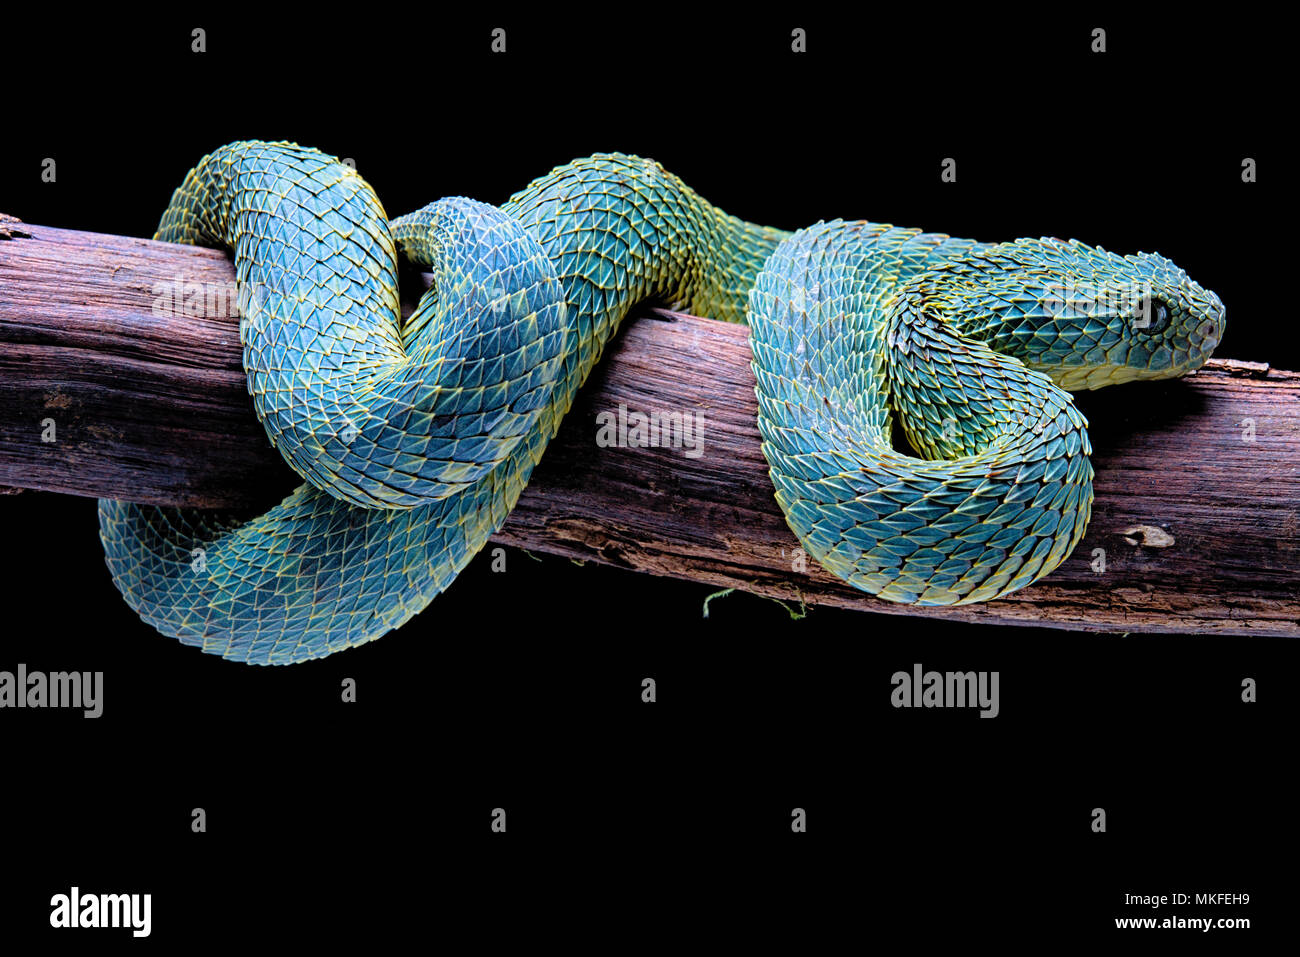 Bush viper / Atheris squamigera, A rare blue eyed form of t…